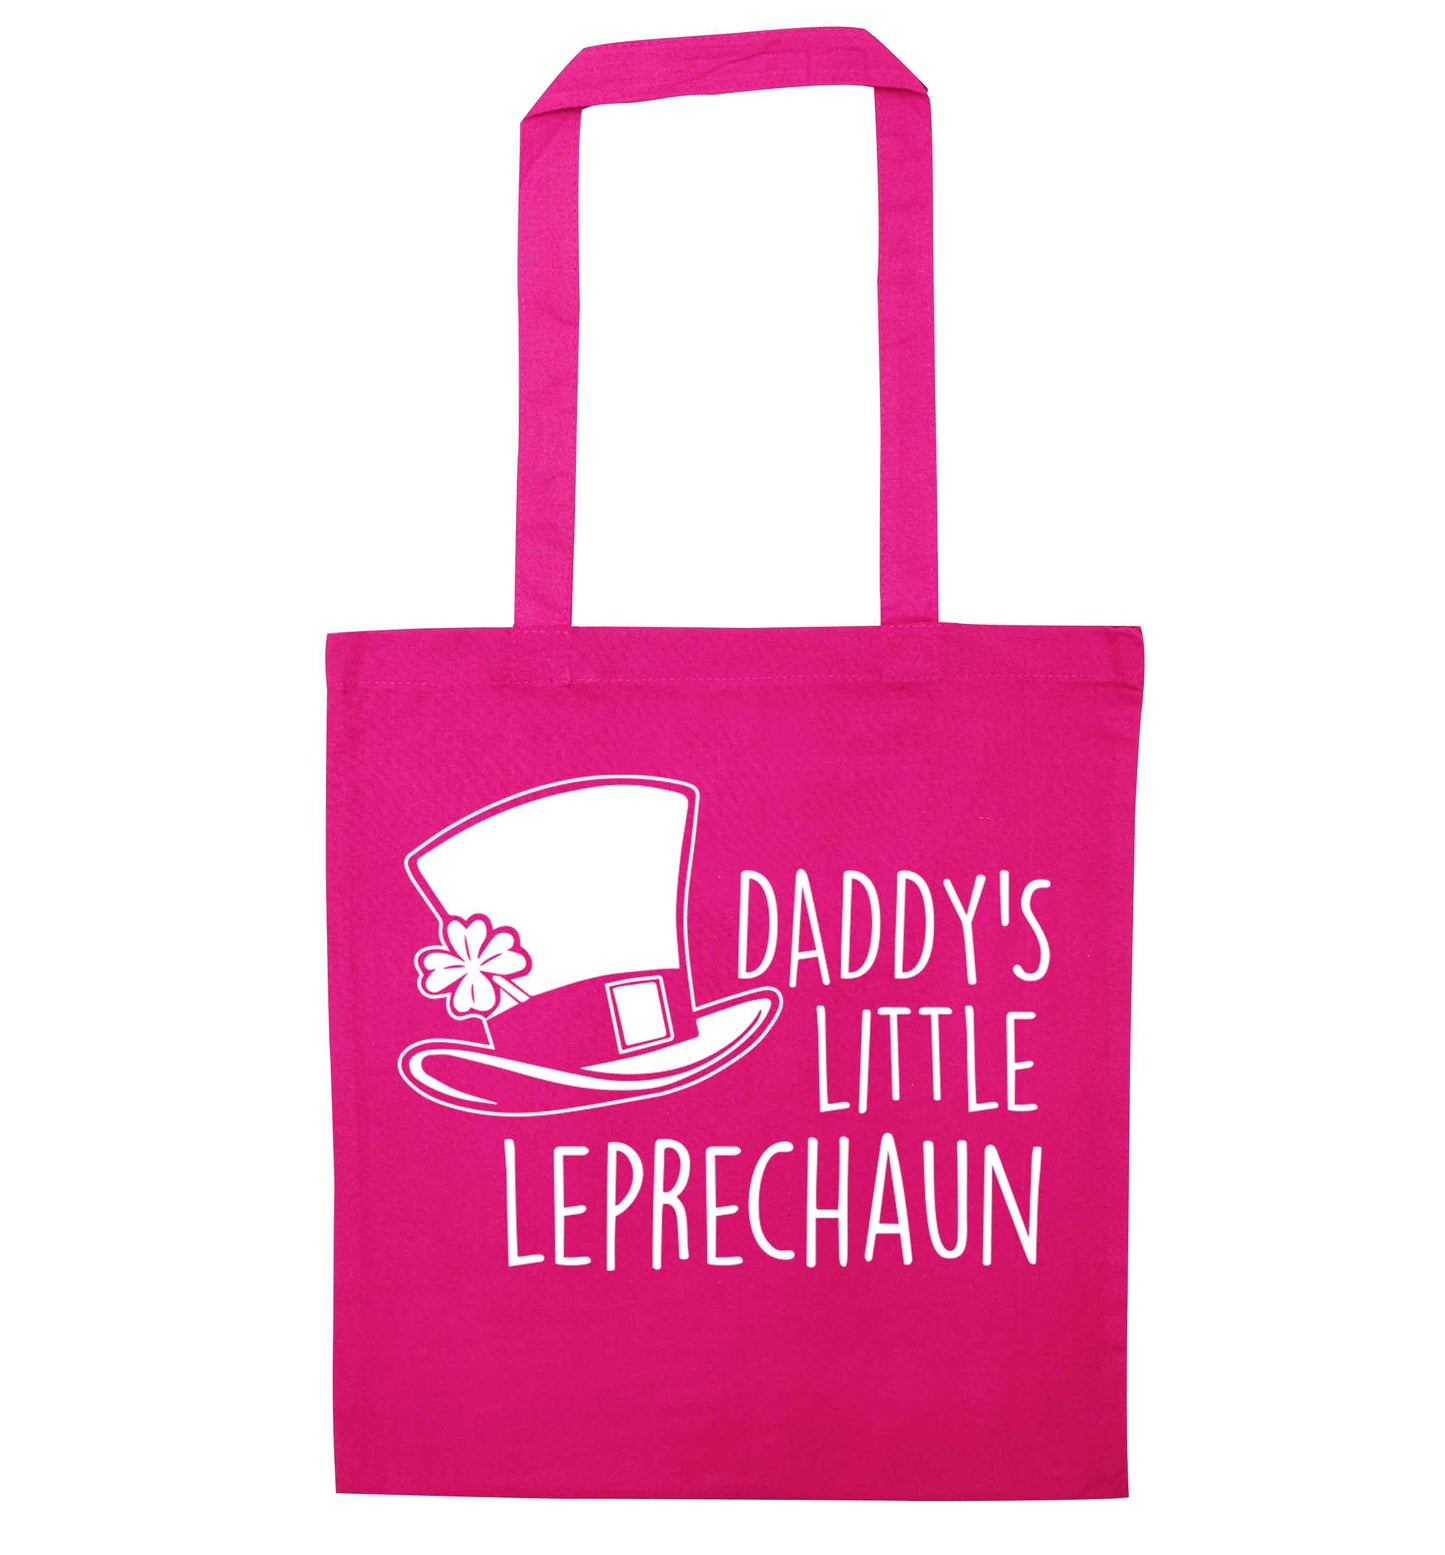 Daddy's little leprechaun pink tote bag